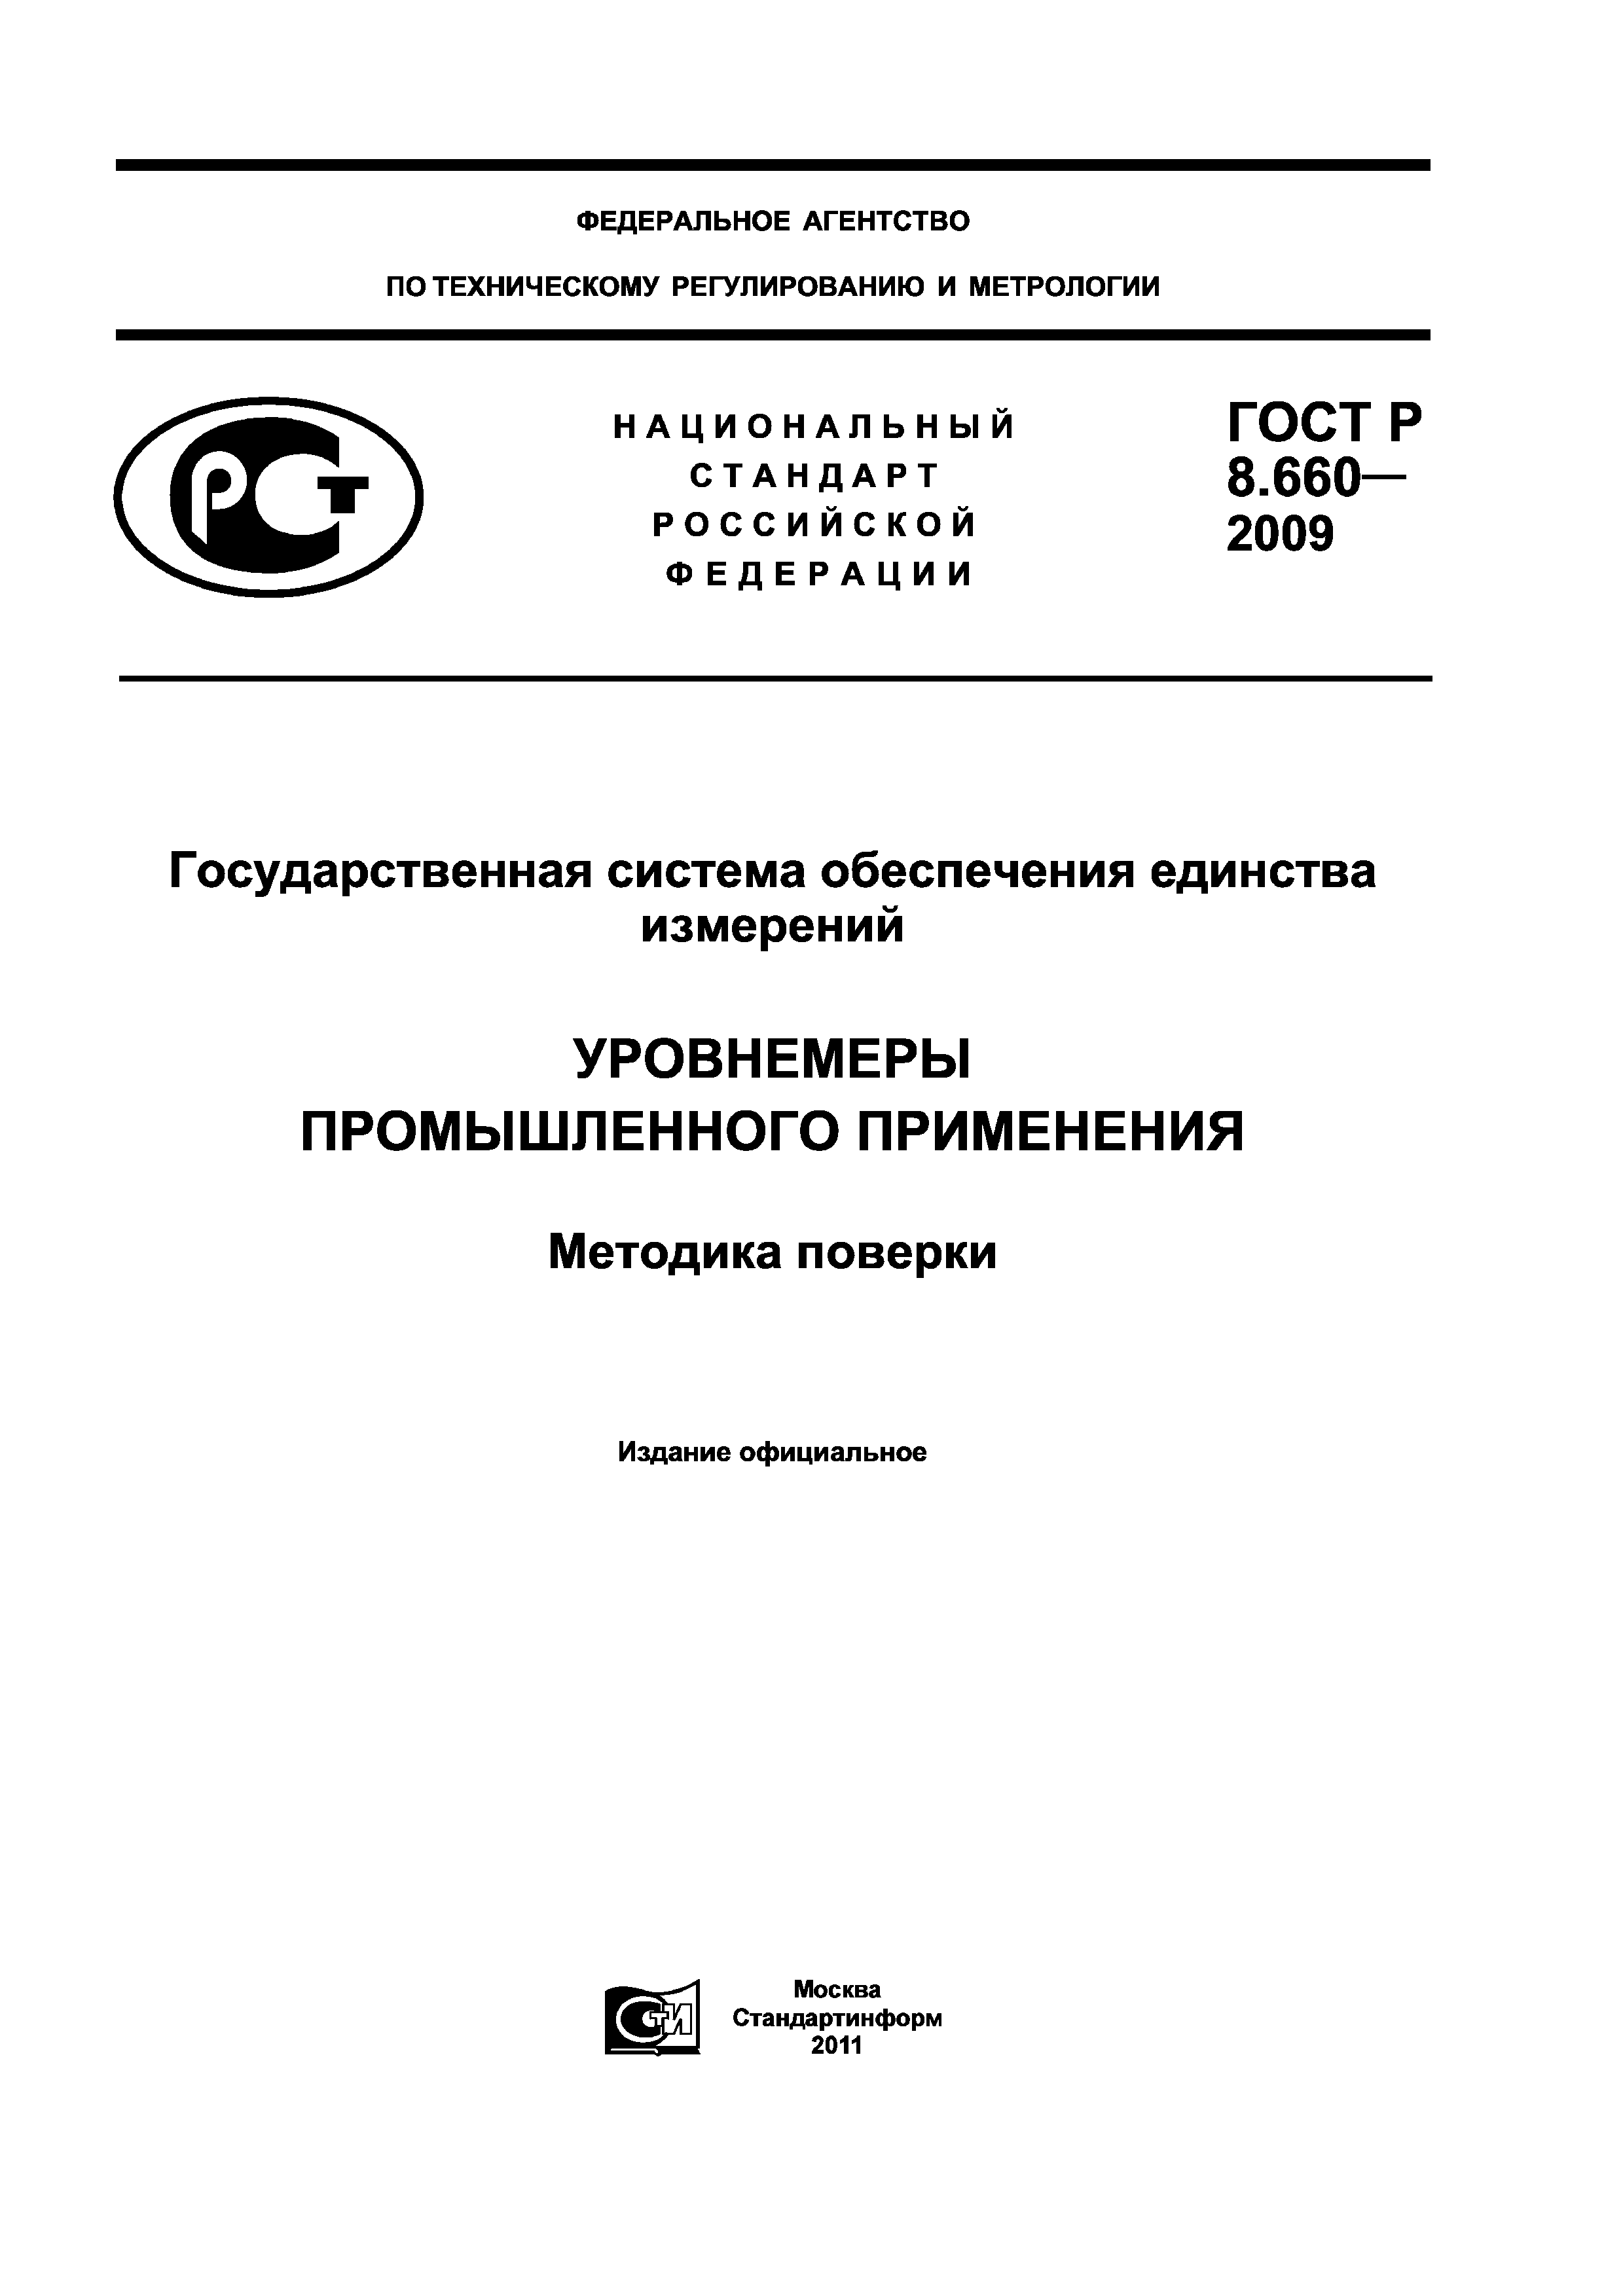 ГОСТ Р 8.660-2009